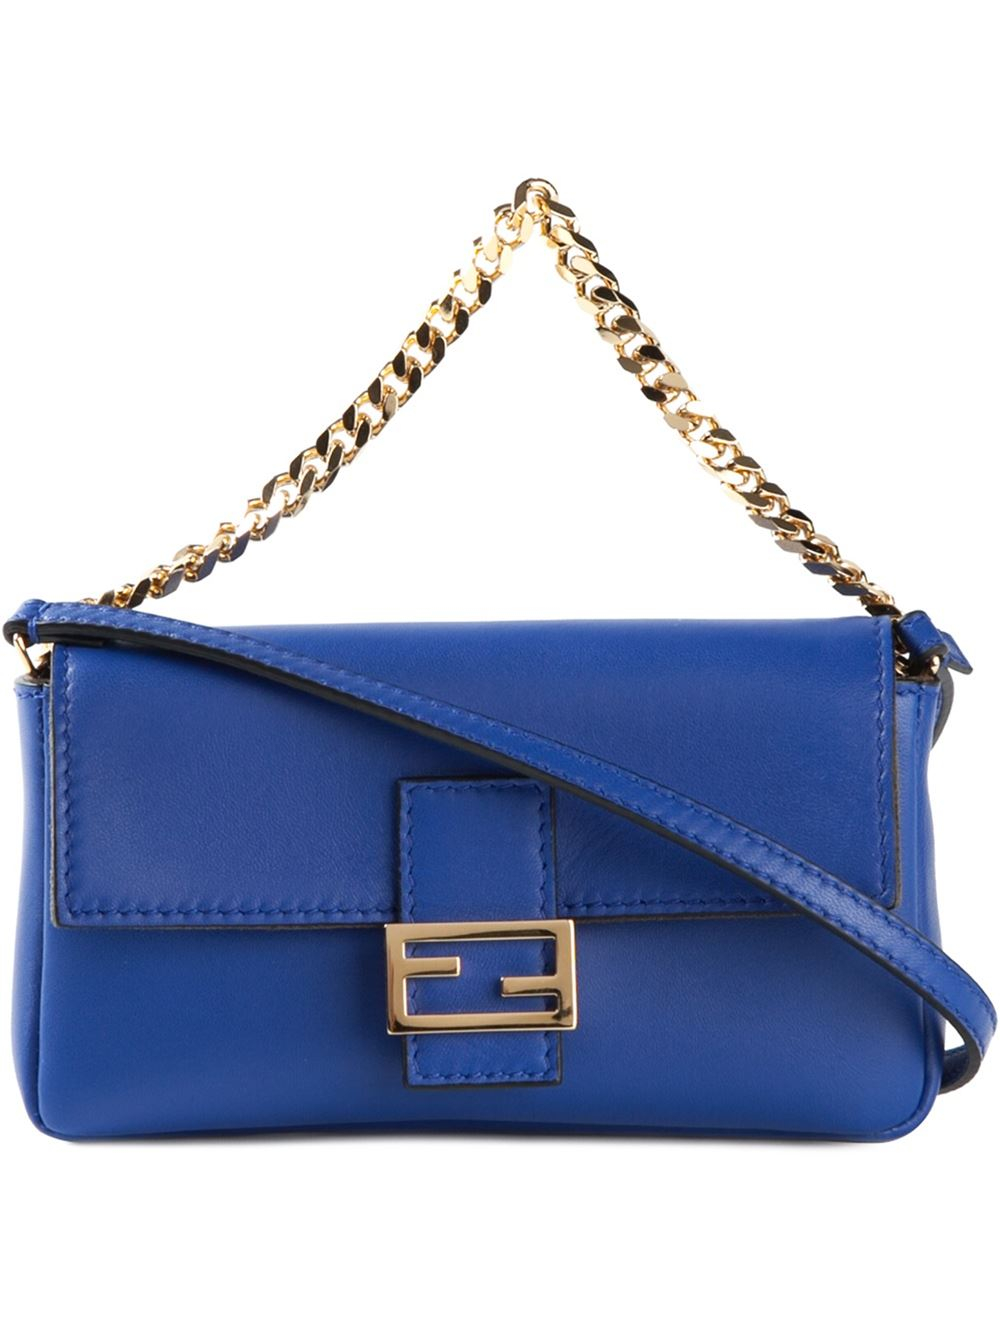 Fendi Leather Micro 'baguette' Shoulder Bag in Blue - Lyst